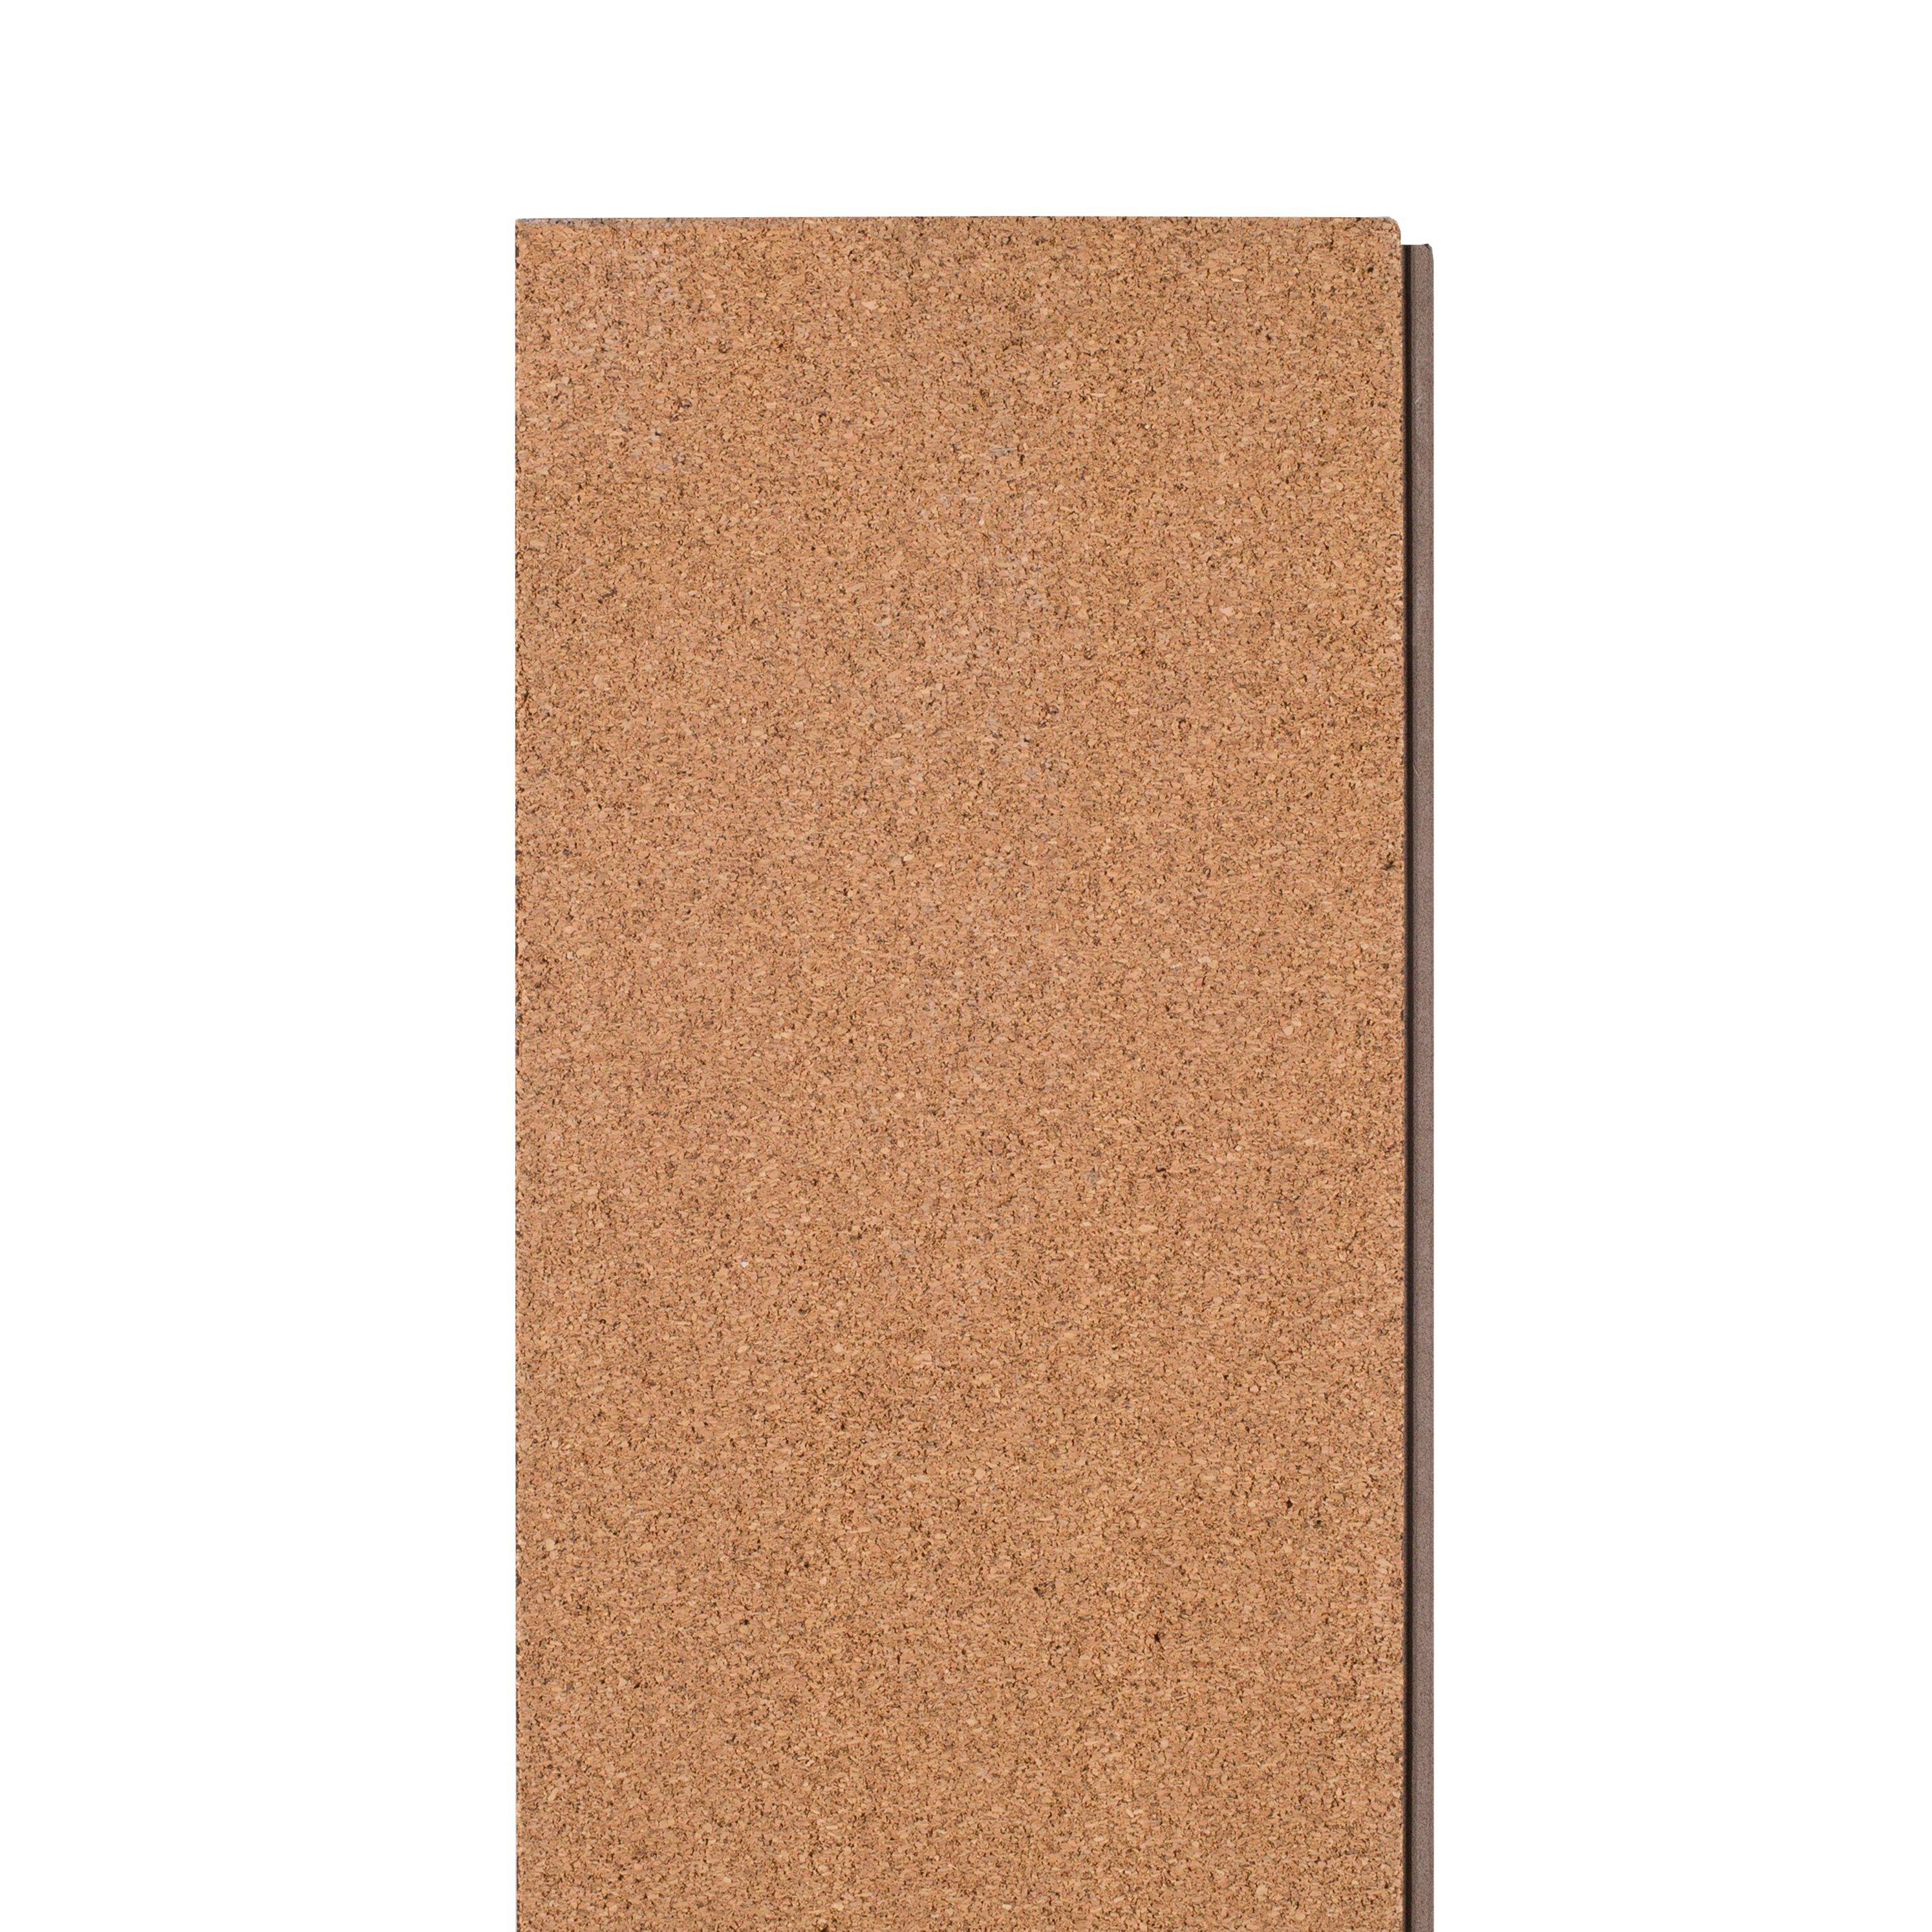 Ralston Rigid Core Luxury Vinyl Plank - Cork Back